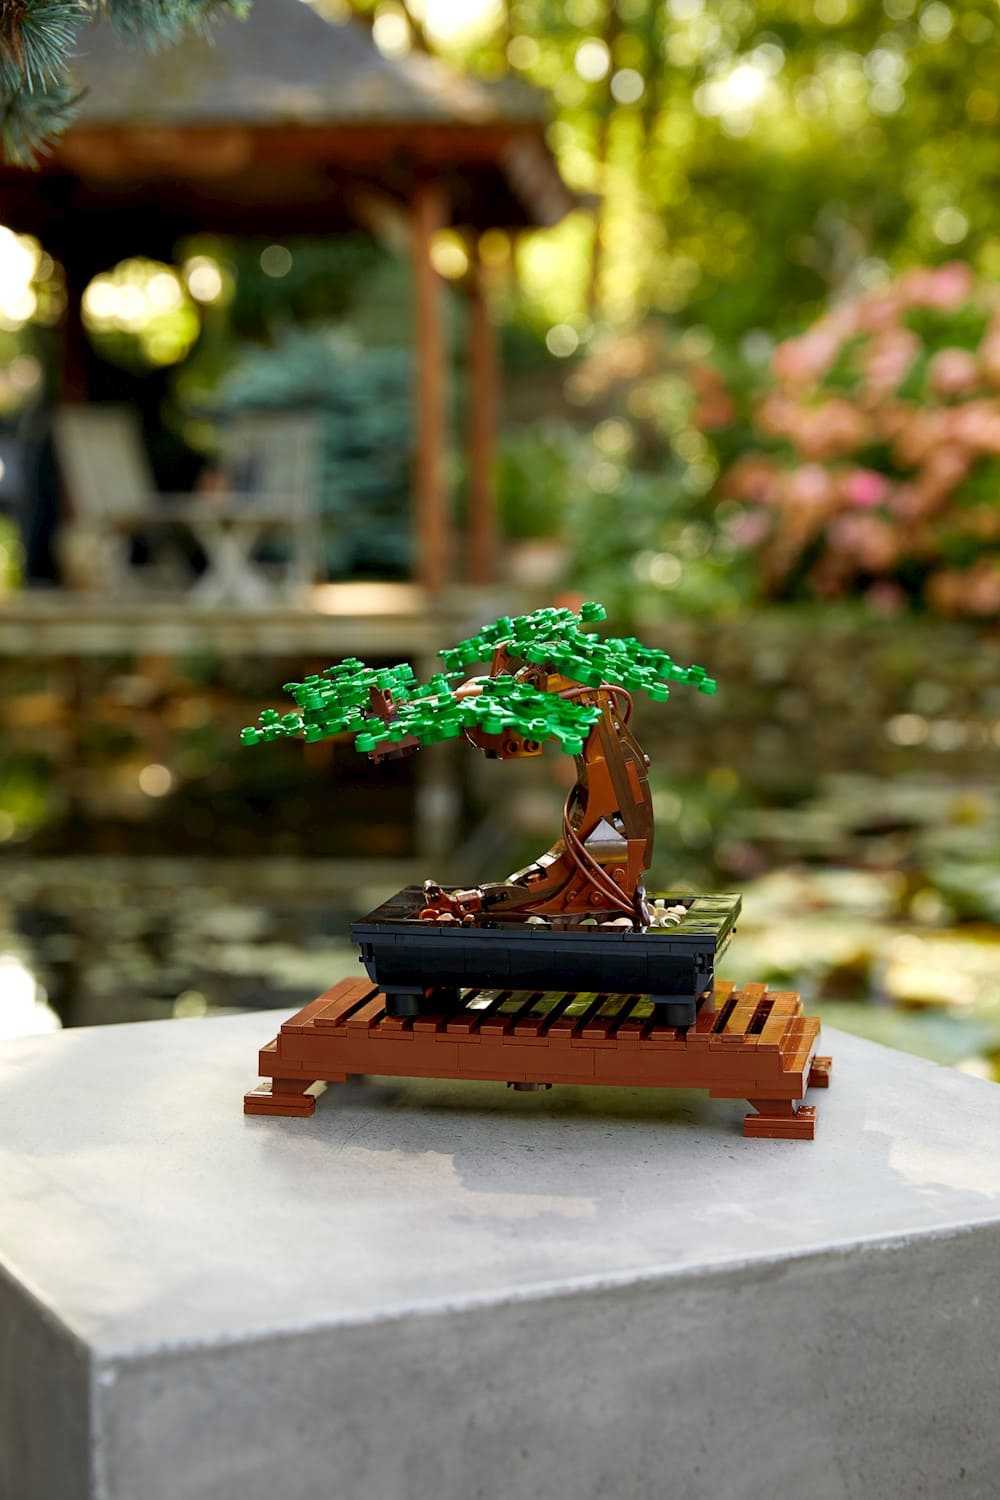 LEGO Creator Expert Bonsai Baum